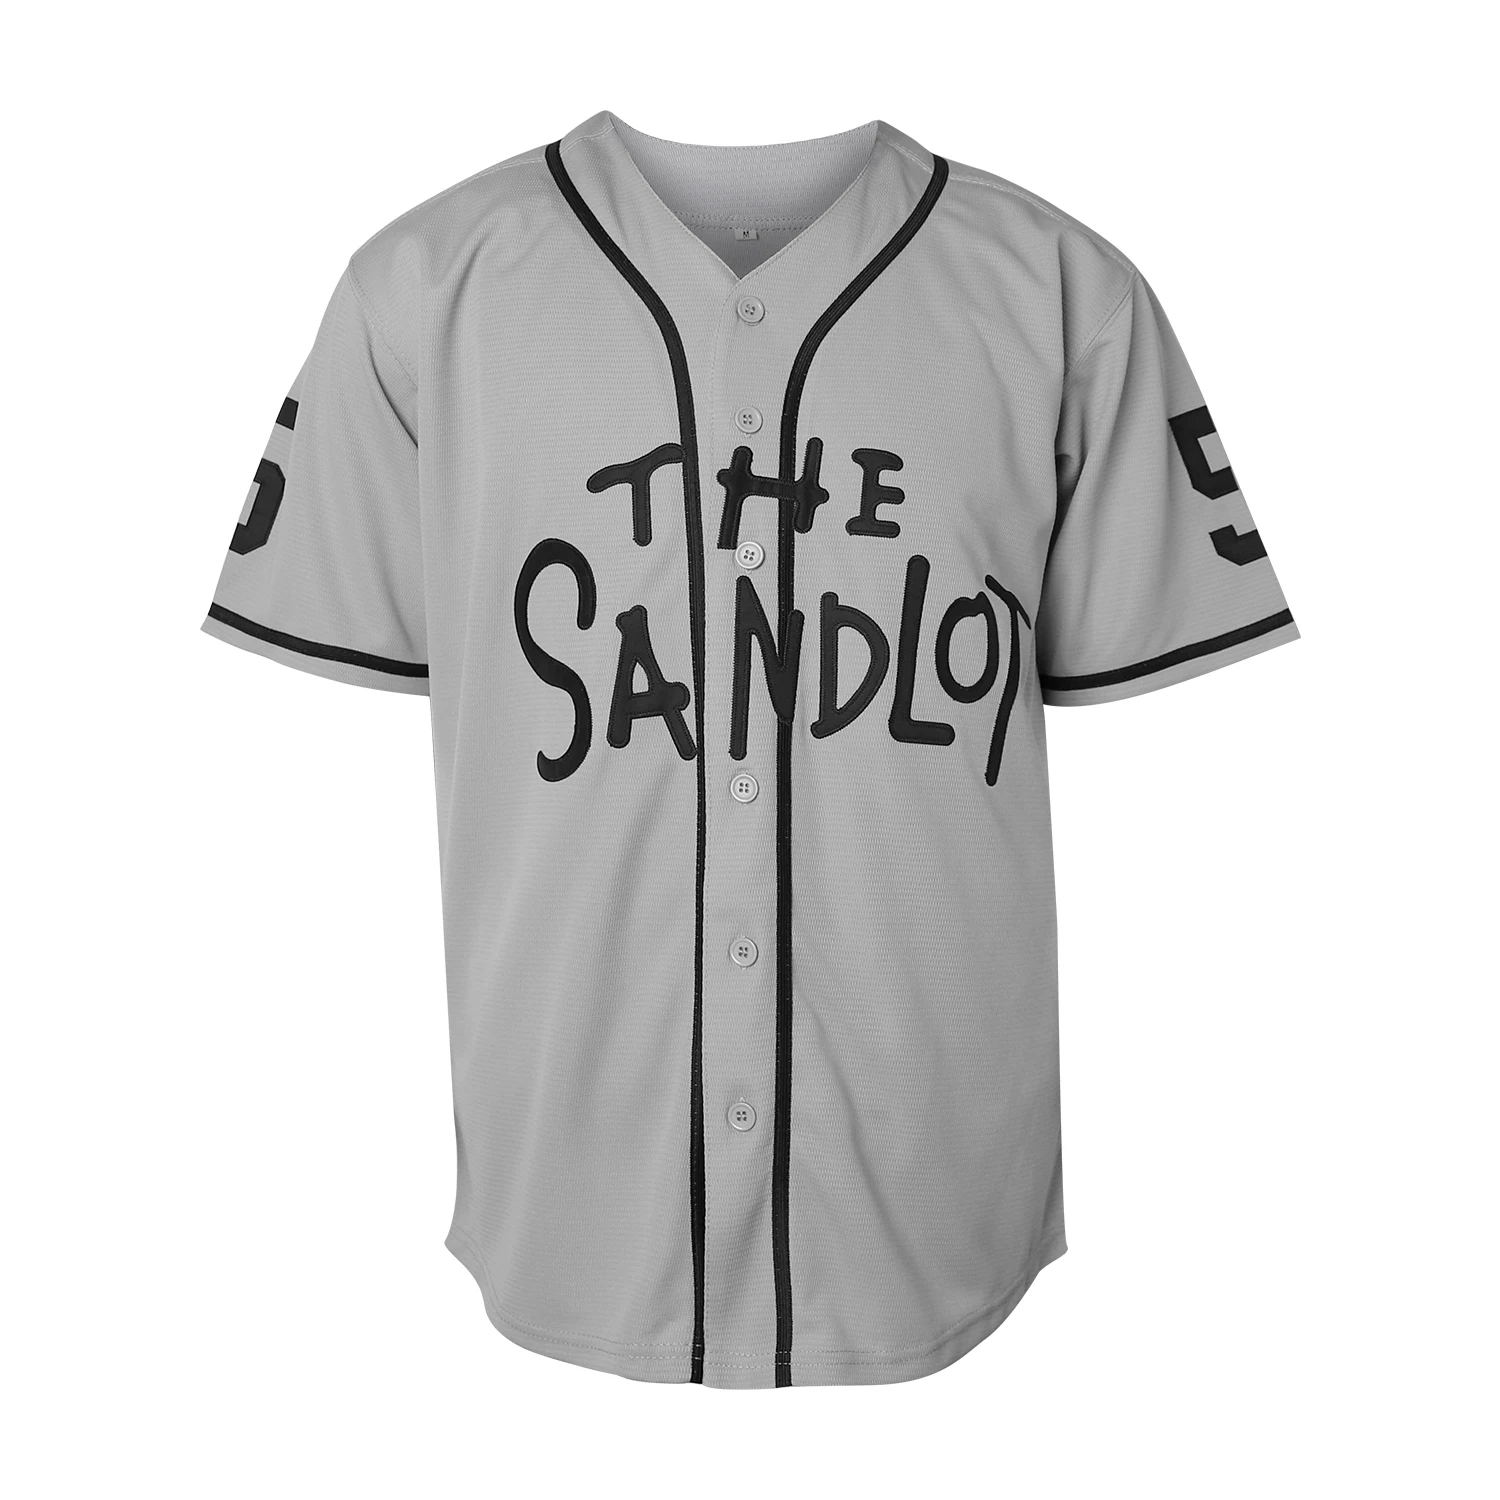 The Sandlot Benny Rodriguez Baseball Jersey Stitched Movie Sports Shirt  Gray White Blue - AliExpress